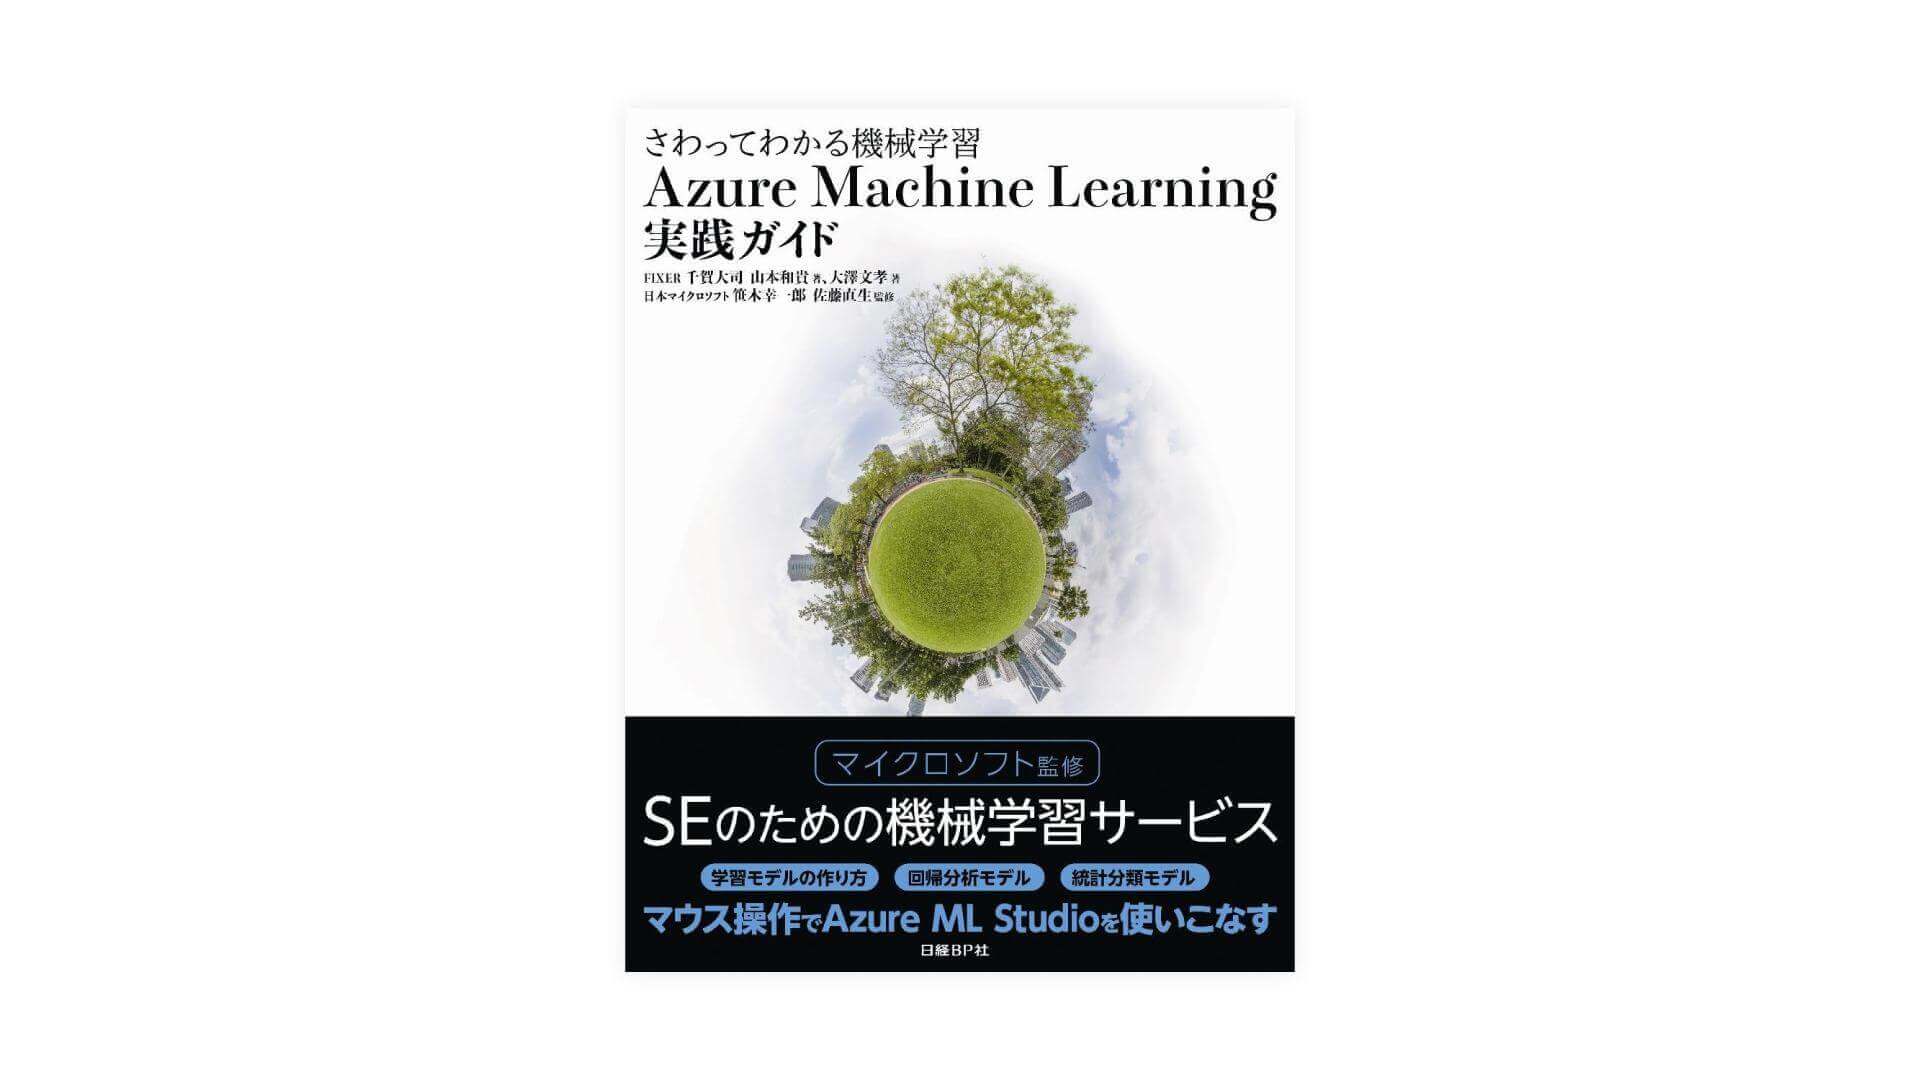 2016_0603_001_publication_microsoft_azure_machine_learning_practice_guide_001.jpg